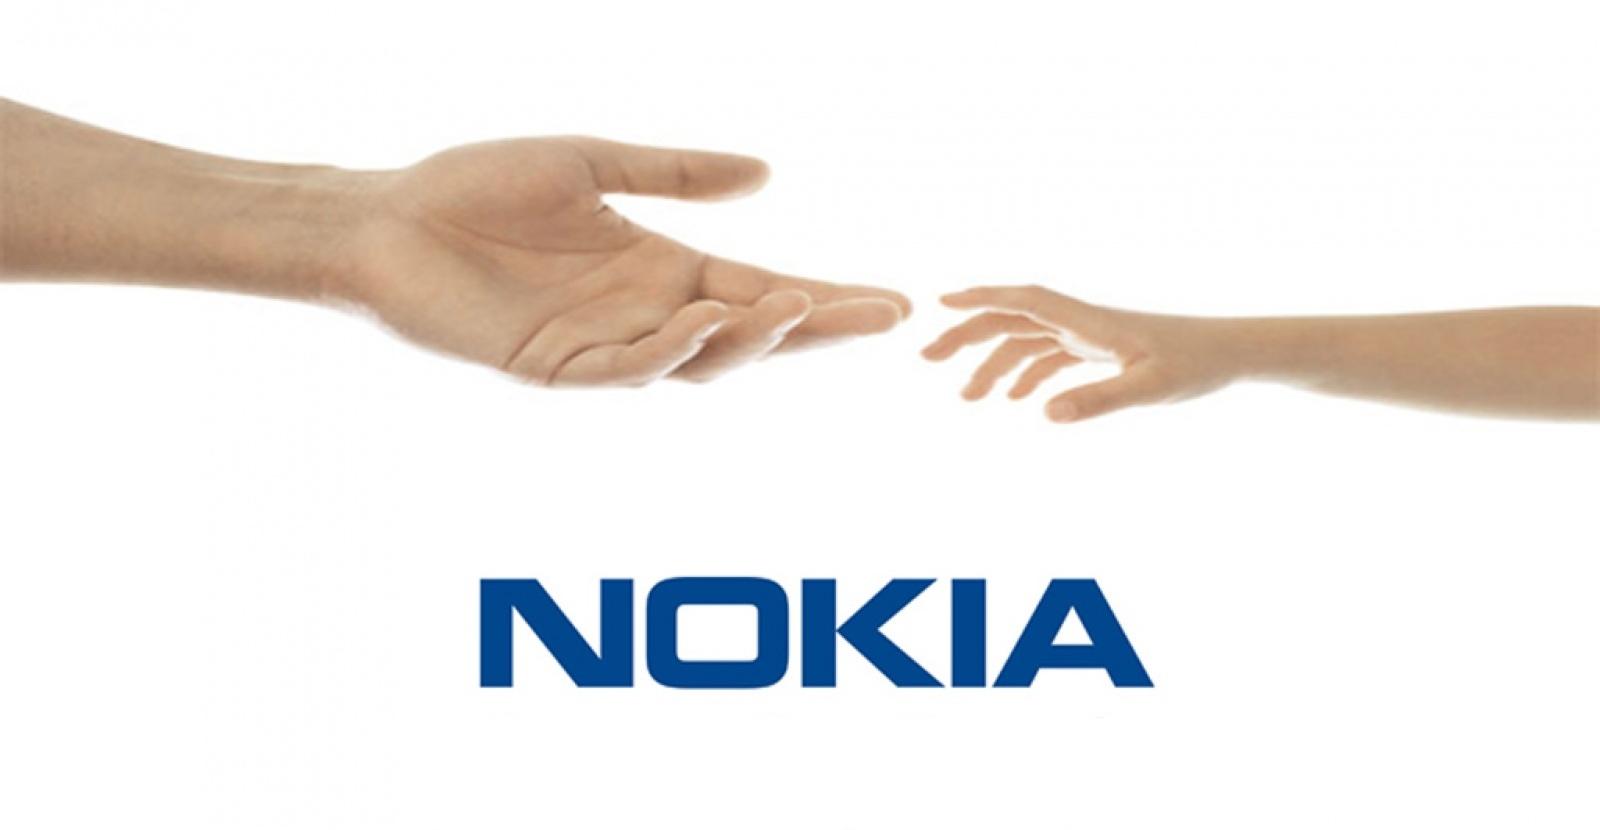 Nokia customer care